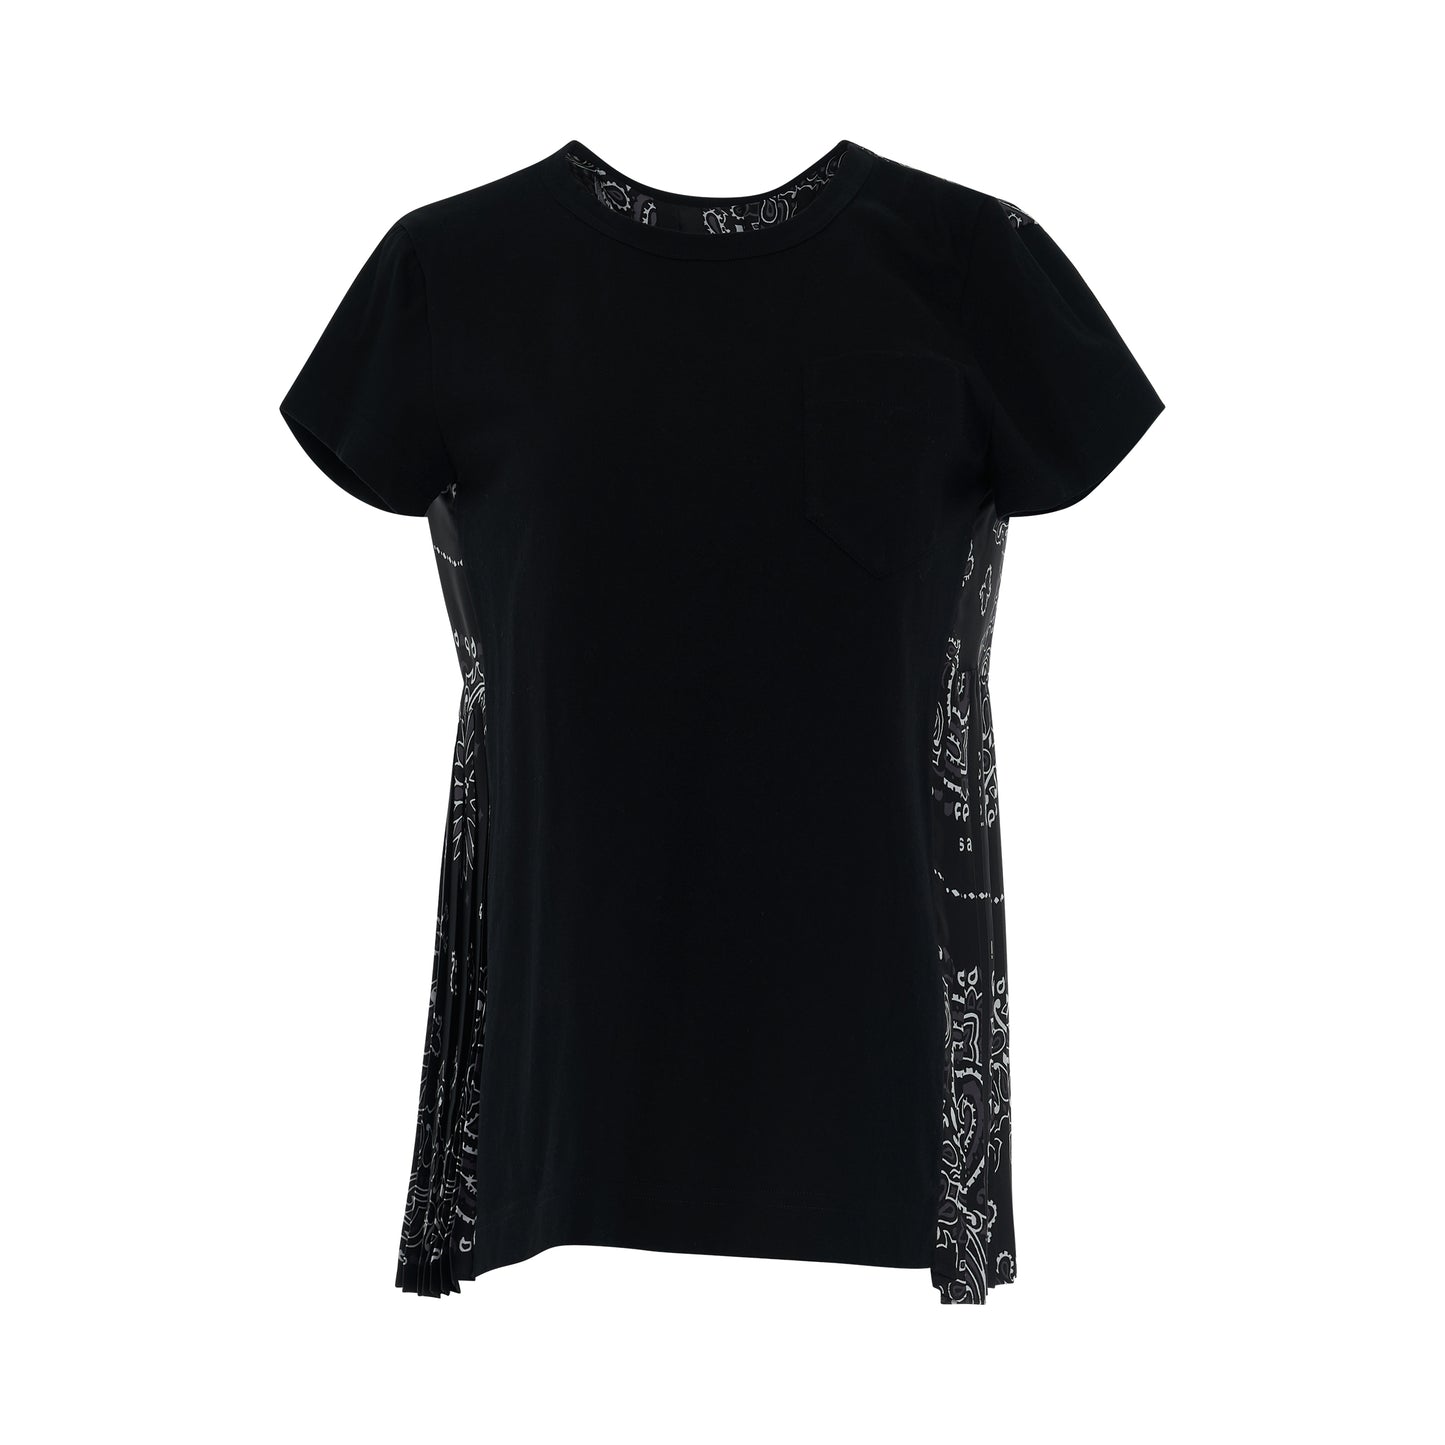 Bandana Print T-Shirt With Side Pleats in Black